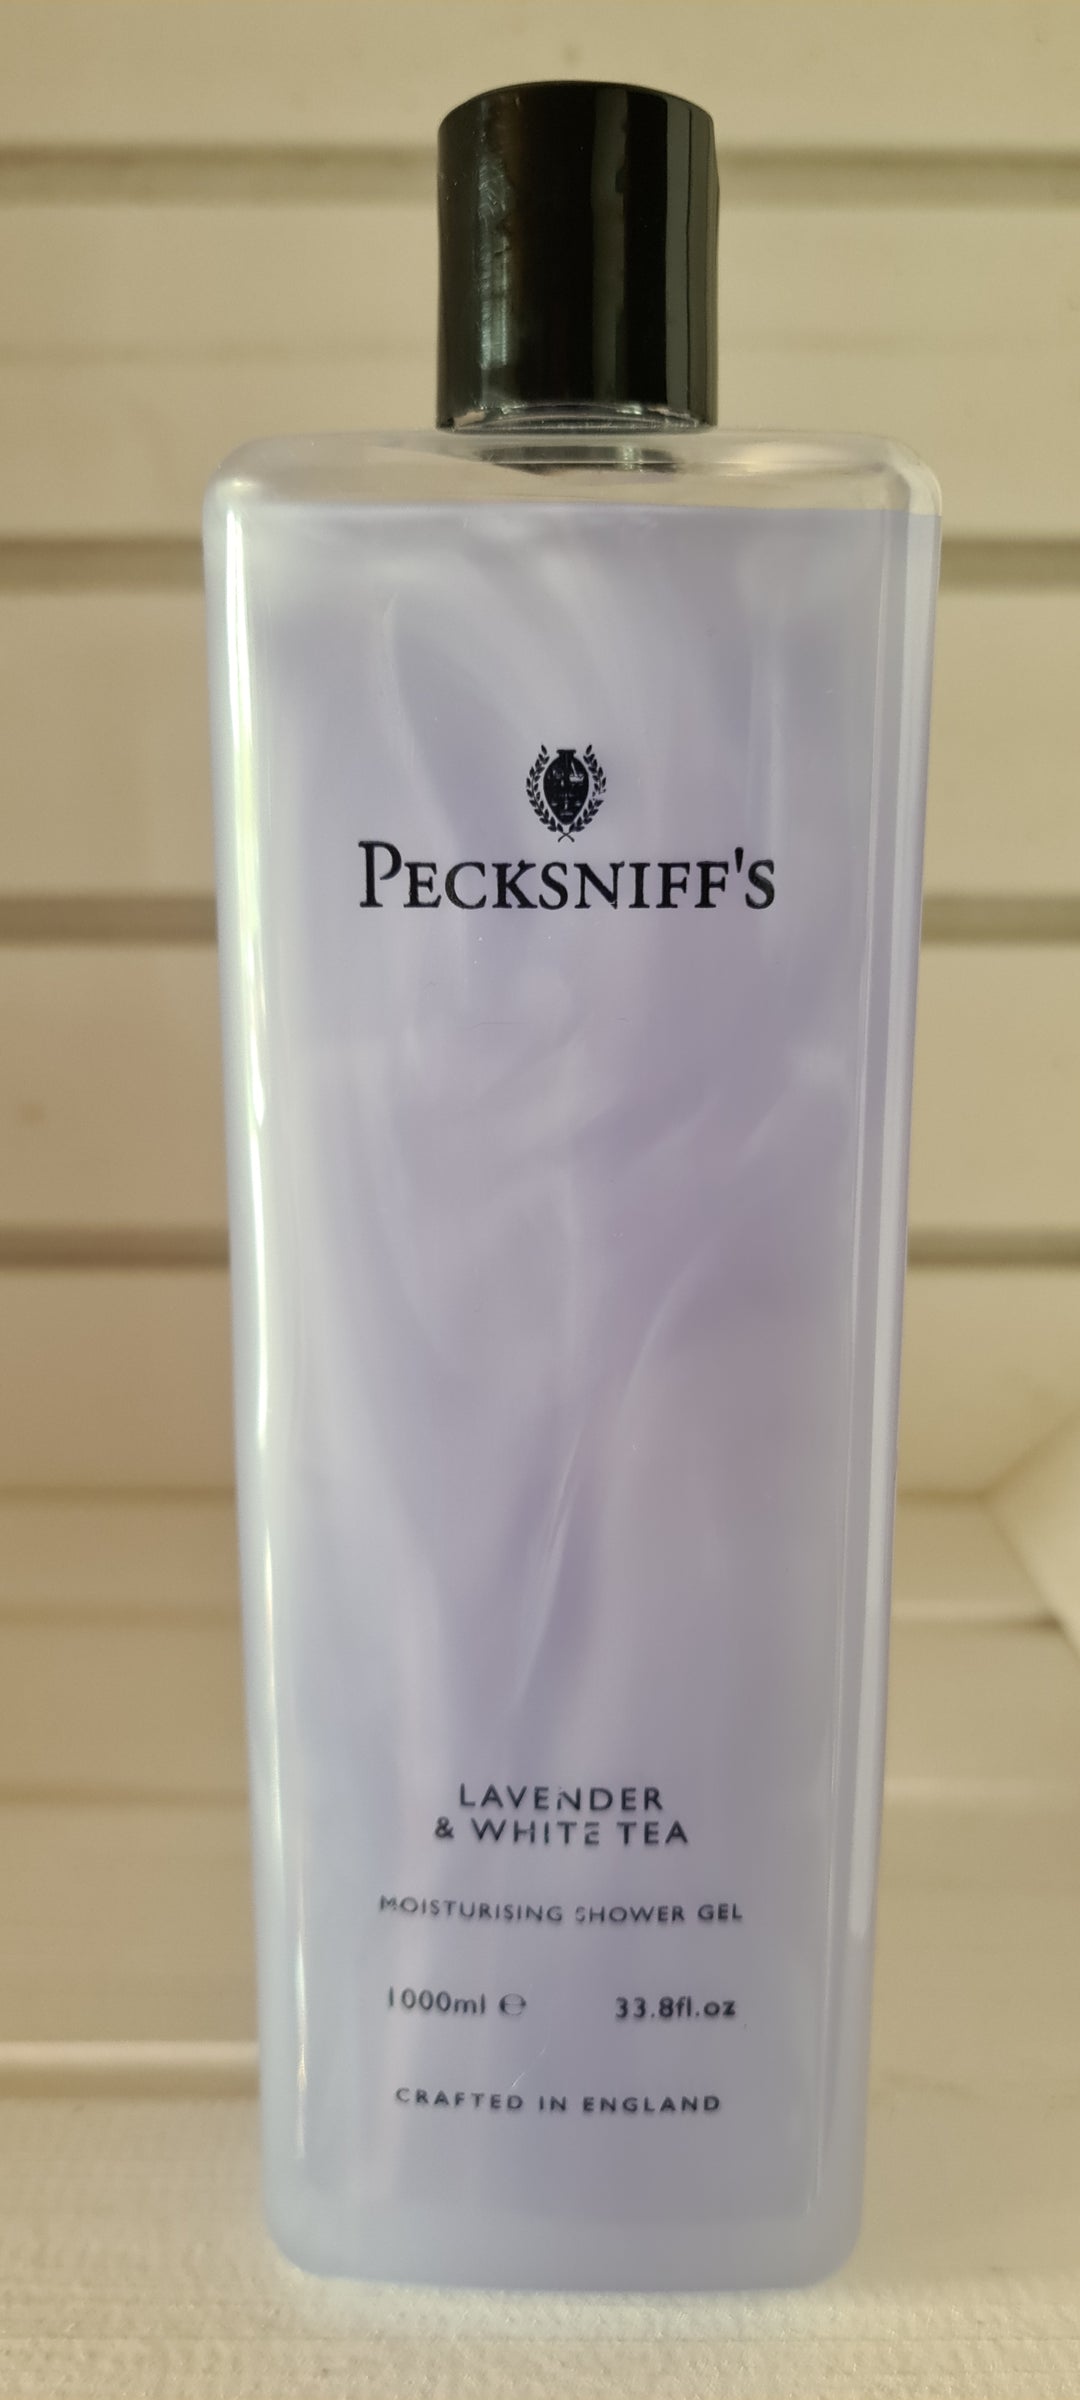 Pecksniff's Lavender & White Tea Moisturizing Shower Gel, 1000 ml - British Moments / Fernweh-Kaufhaus